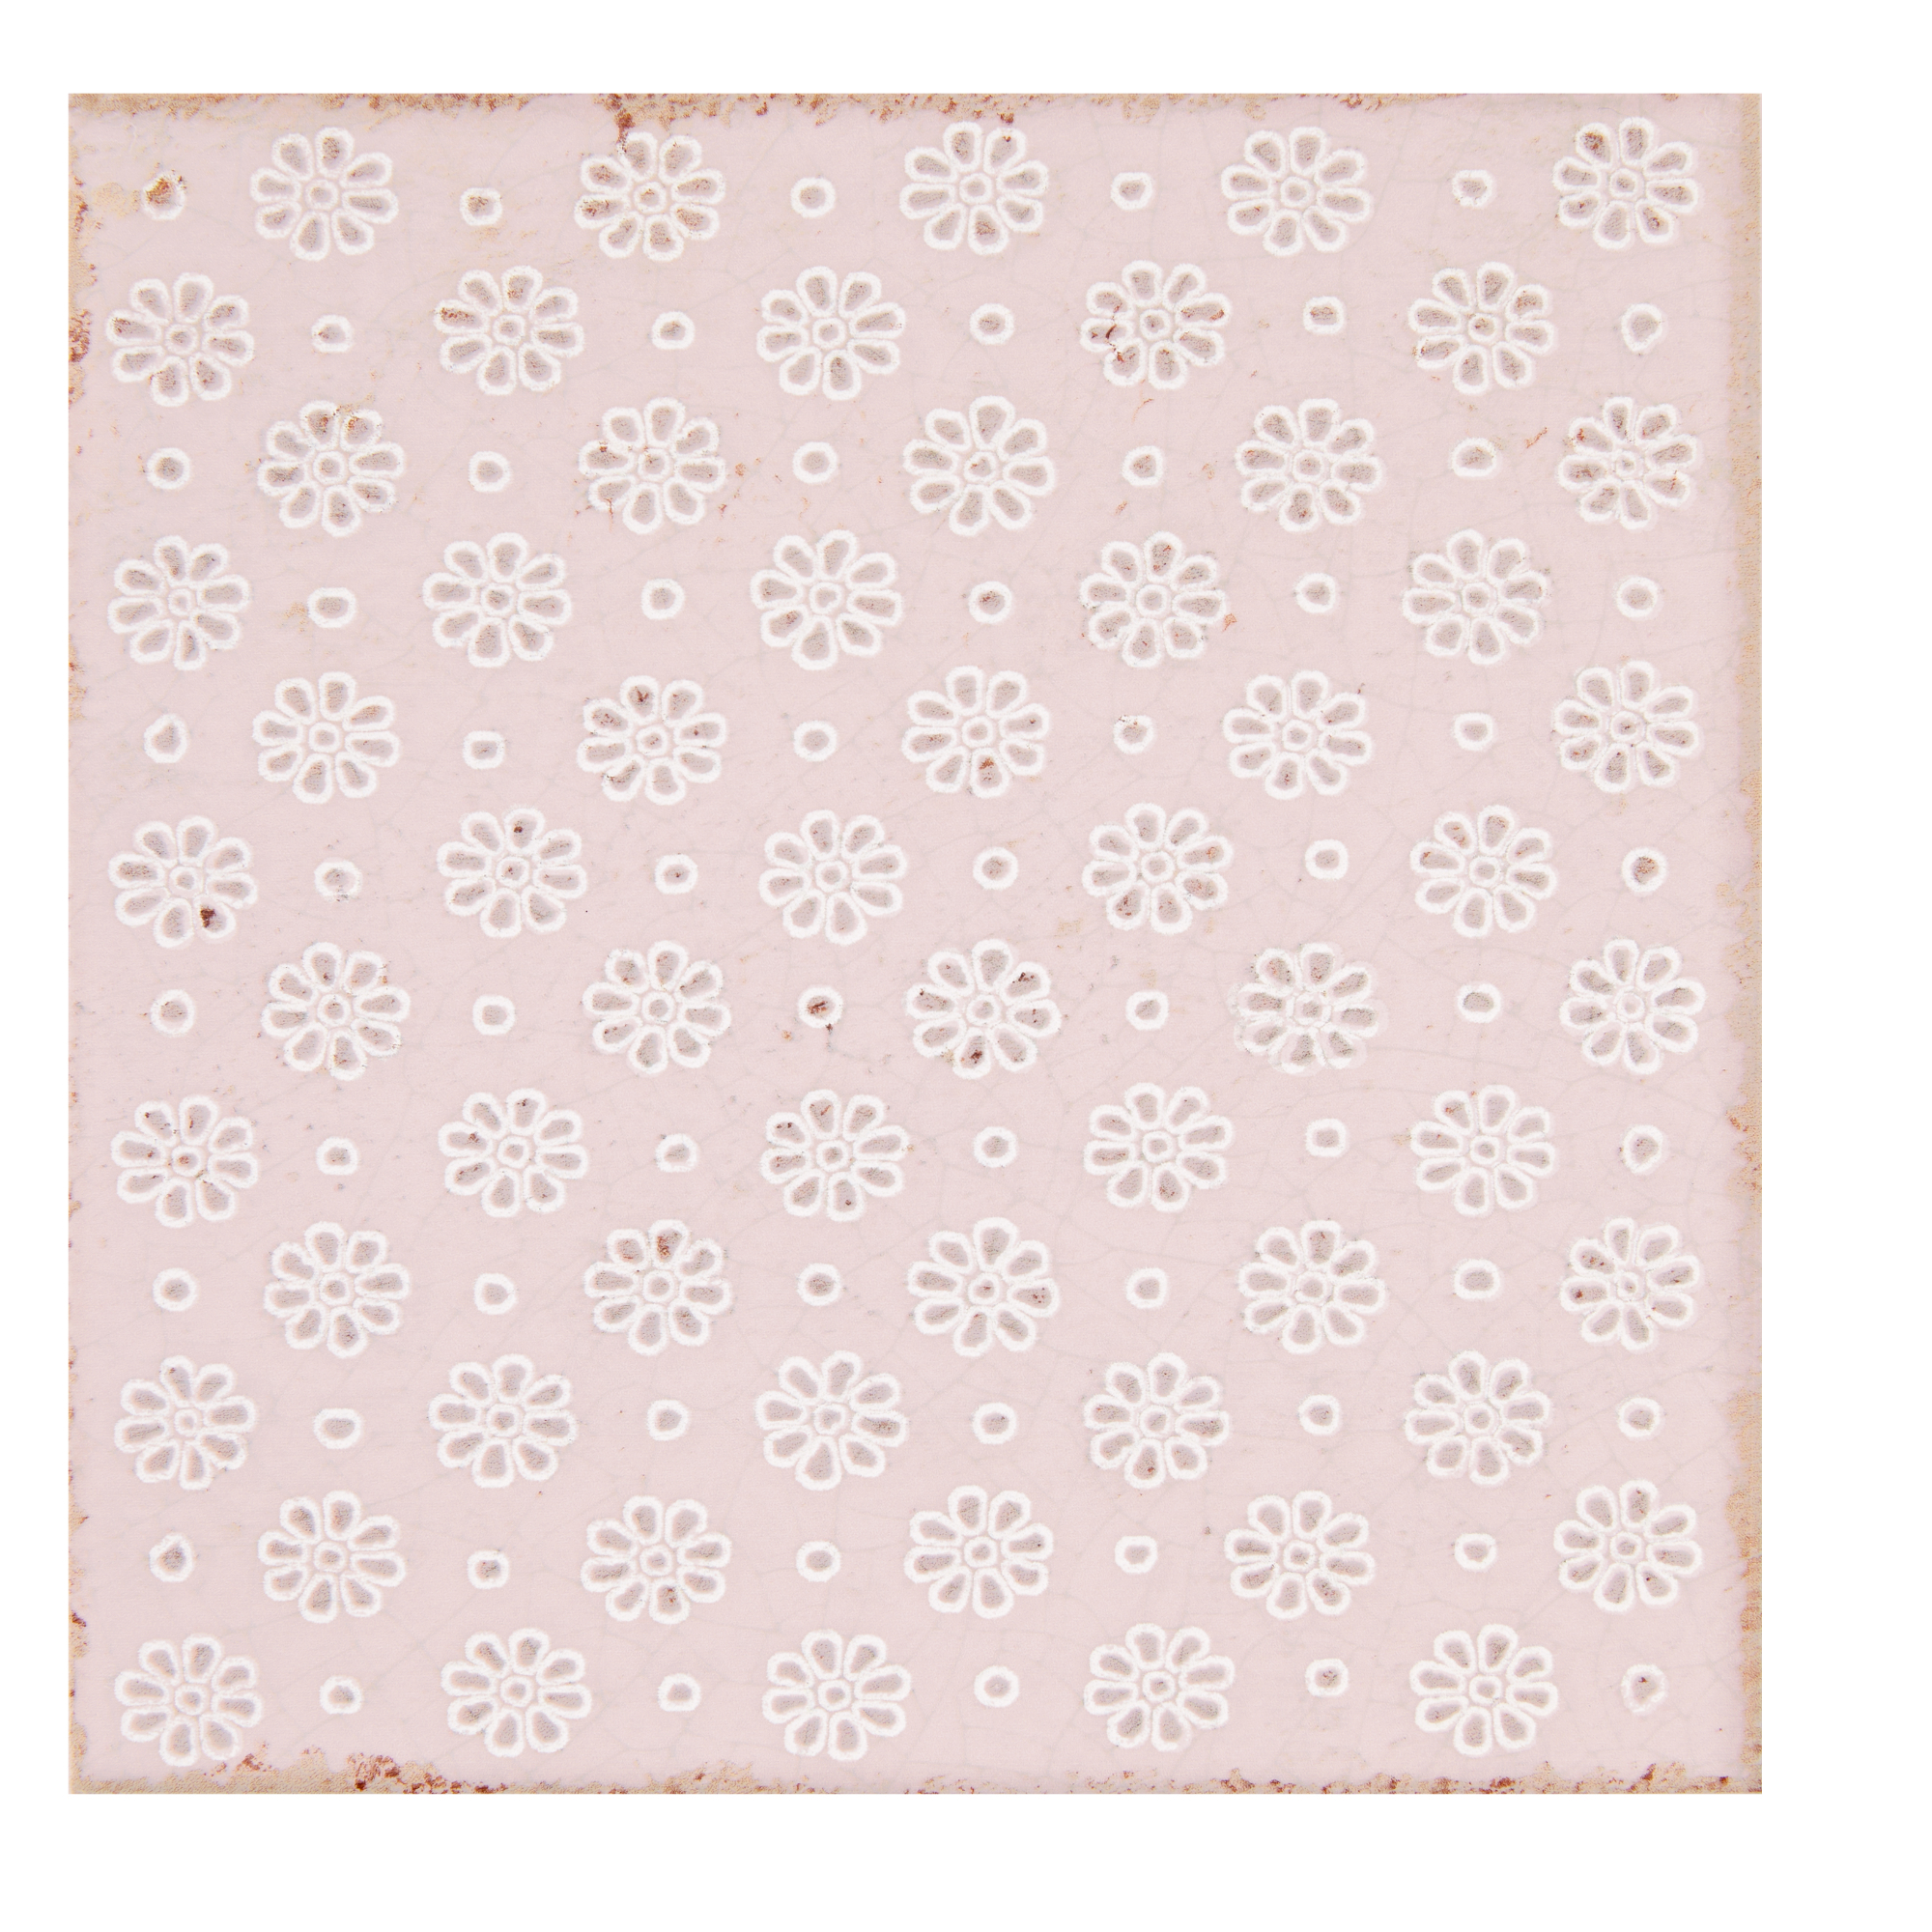 A. Selke Art. Soft Pink Lace 15cm